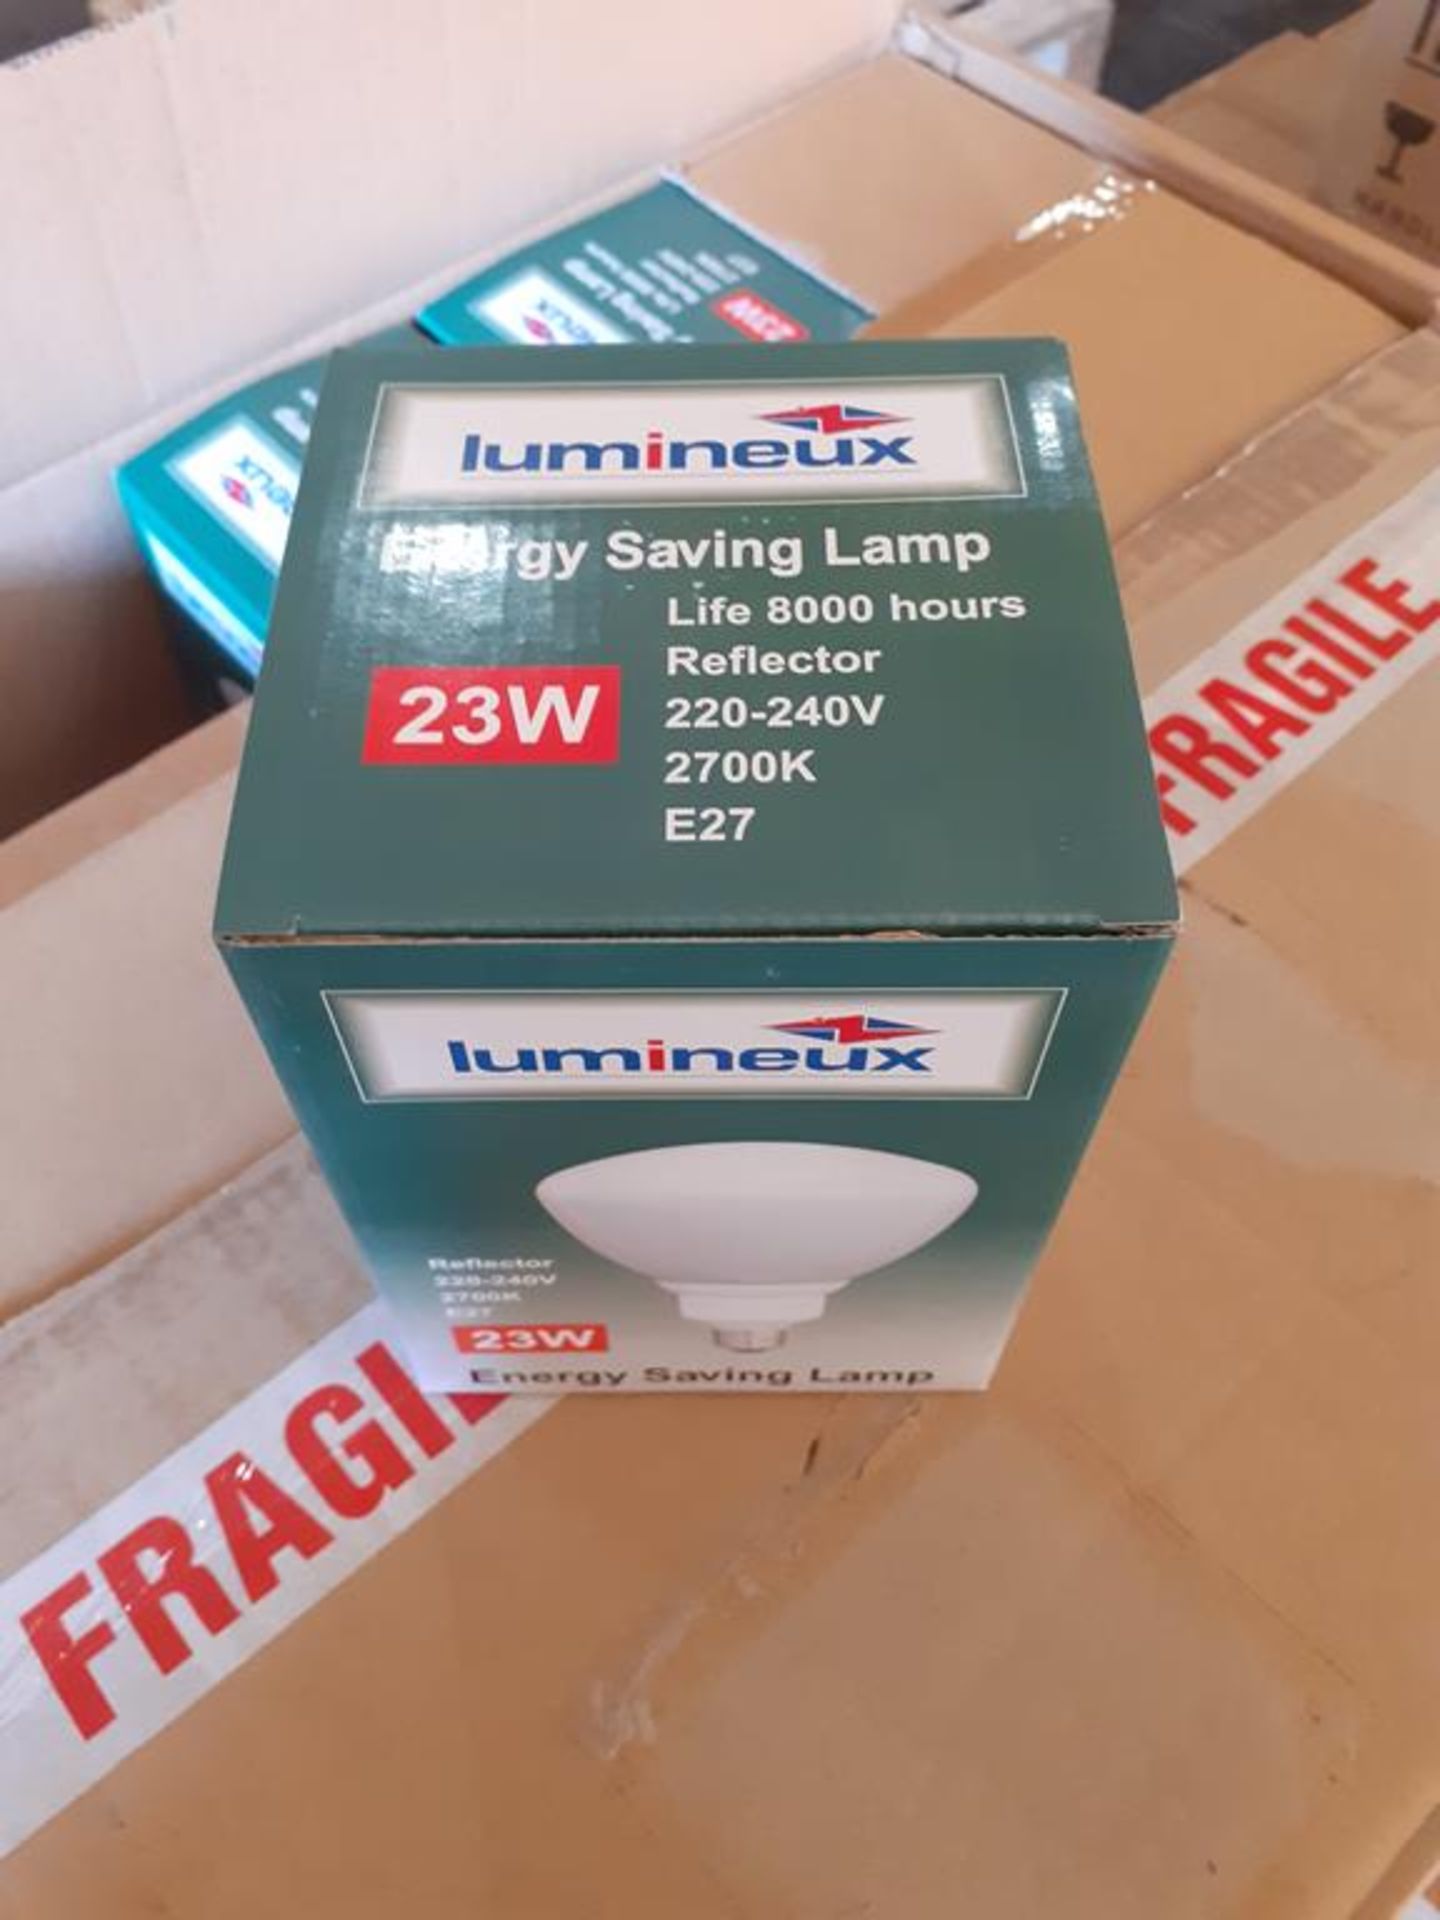 3x boxes of Lumineux Reflector 23W E27 2700K 220-240V Engery Saving Bulbs (20pcs per box) - Image 2 of 3